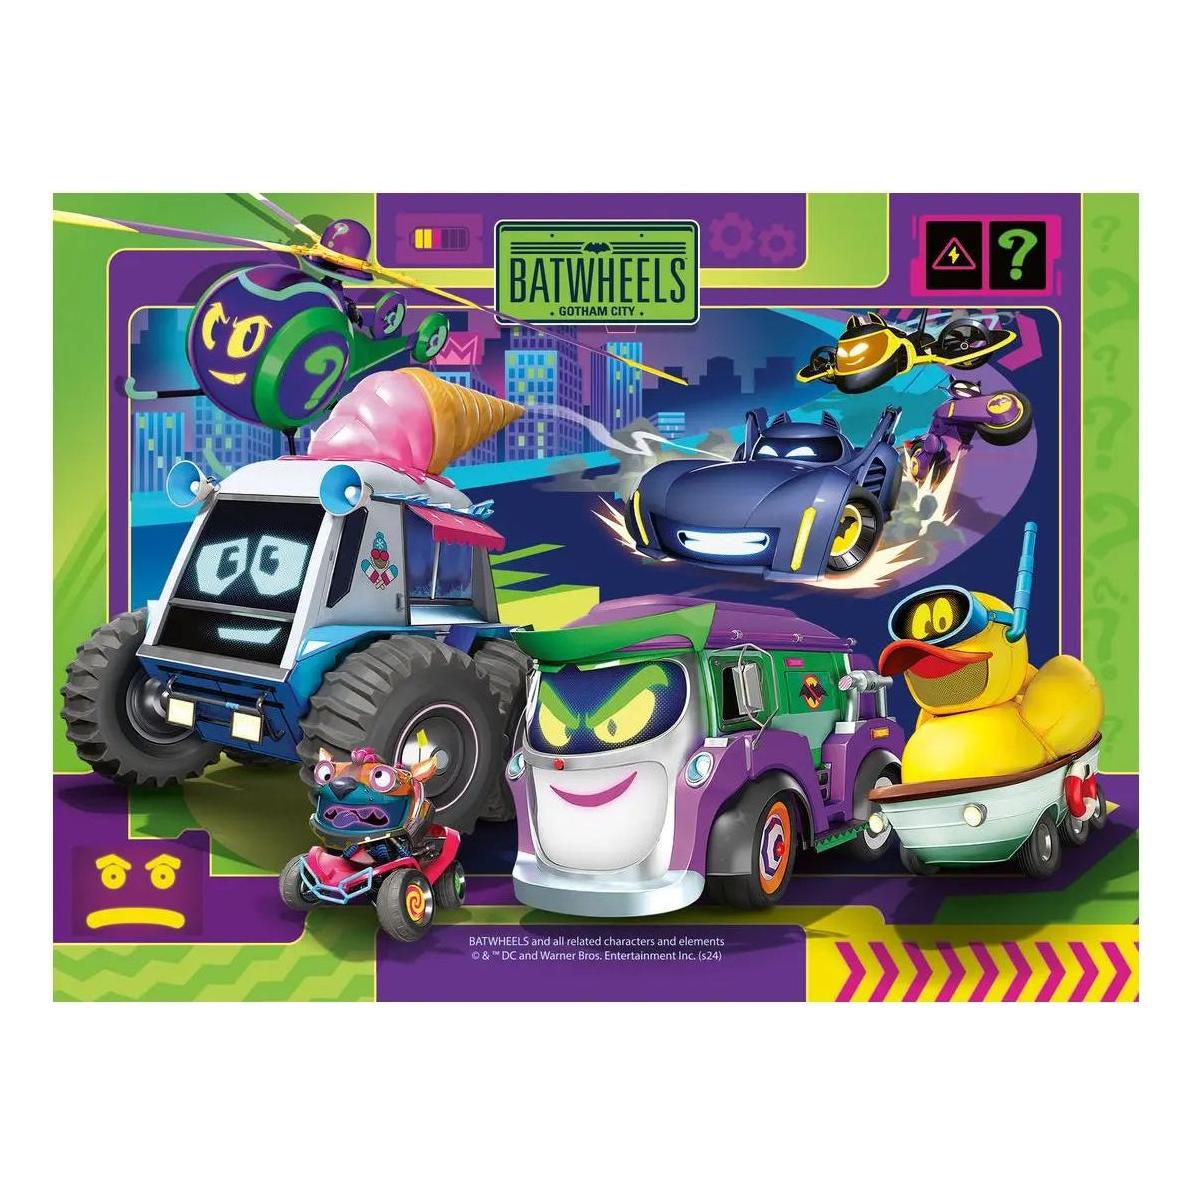 Batwheels 4 in a Box Puzzle Ravensburger